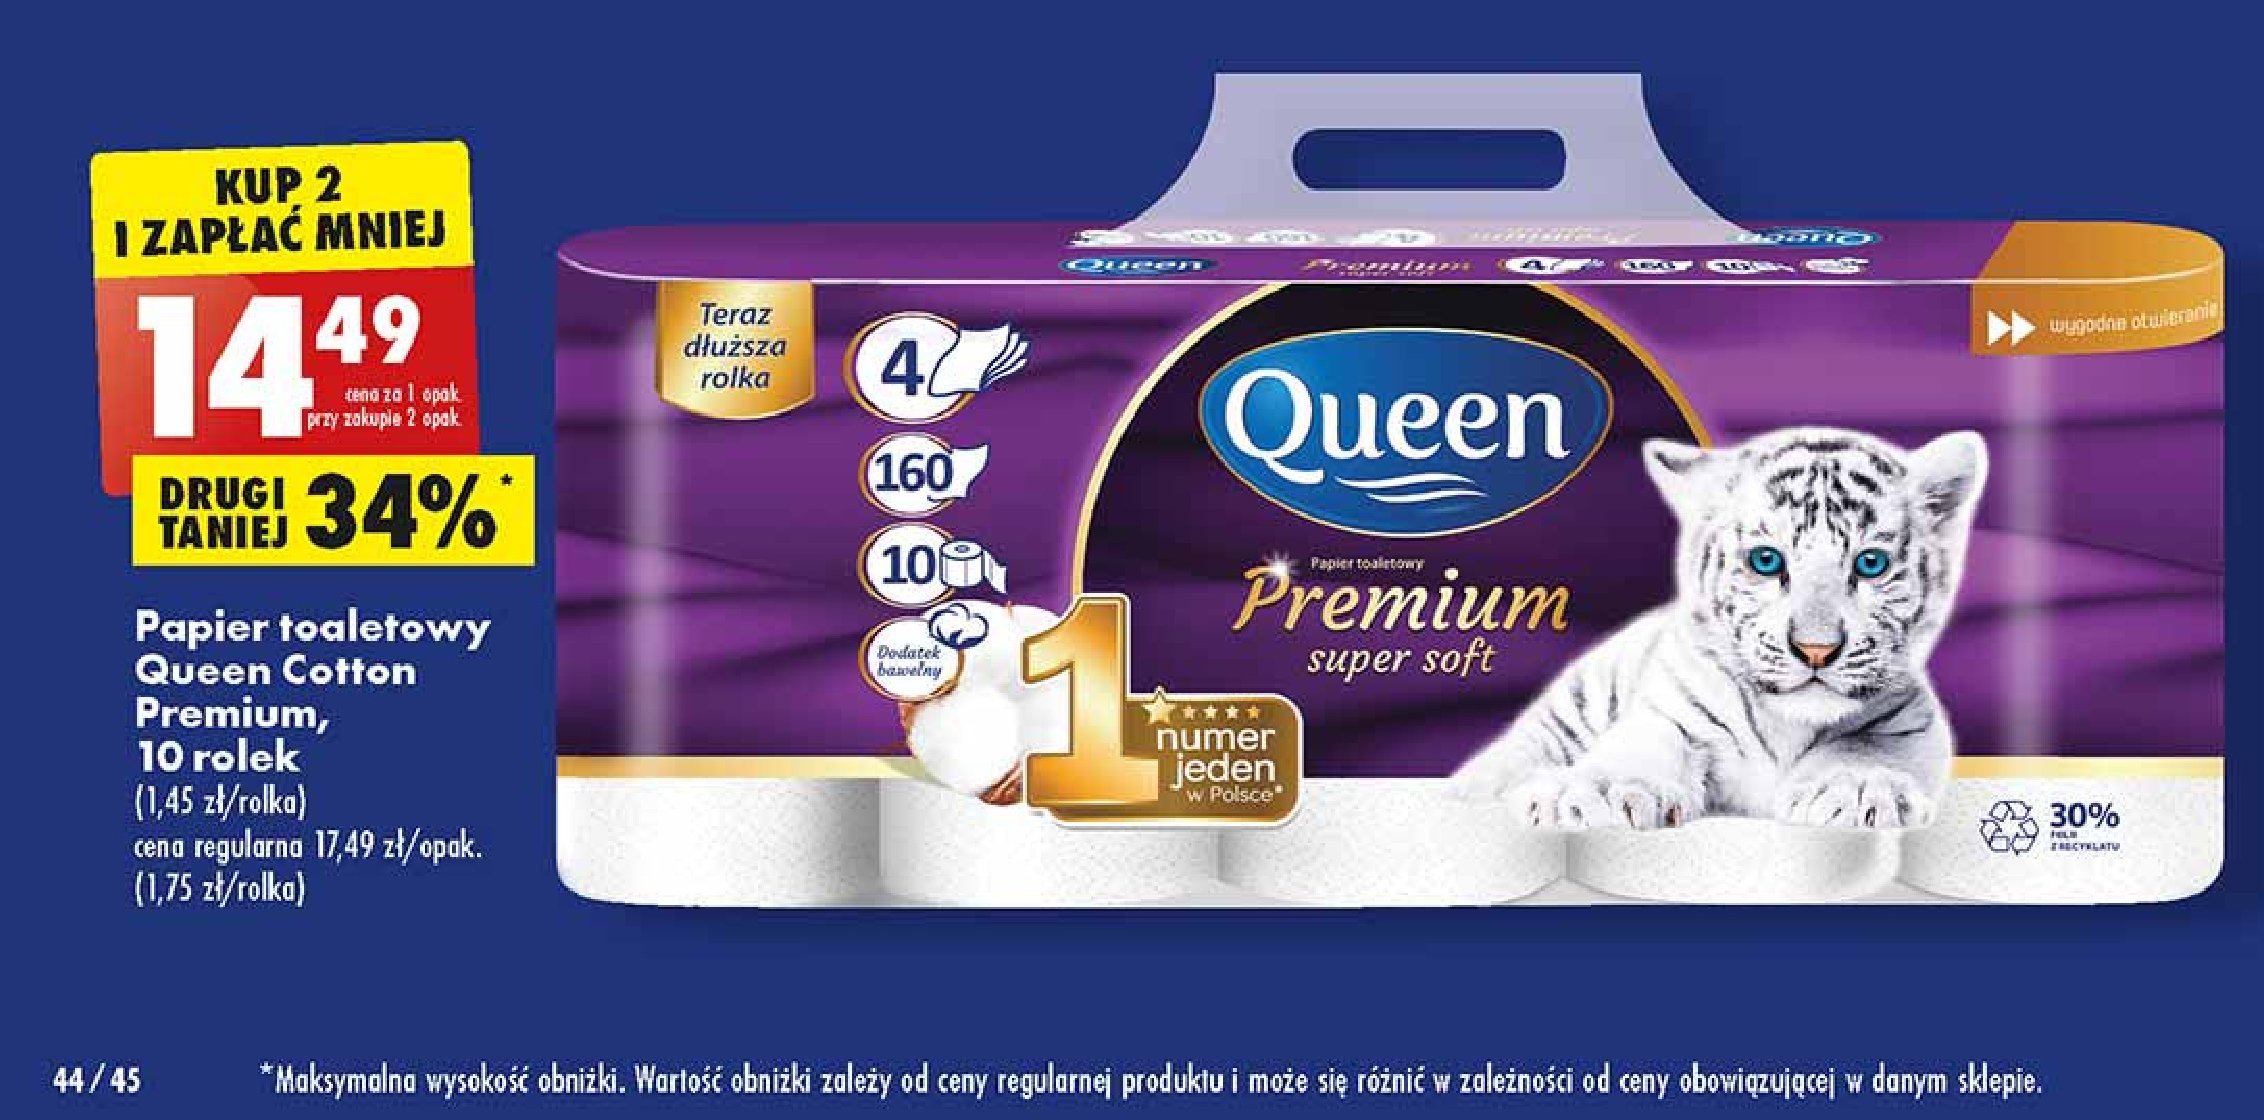 Papier toaletowy super soft Queen premium promocje